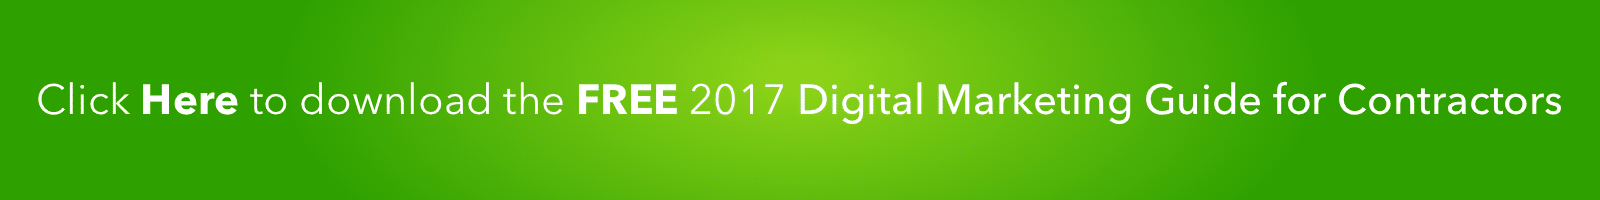 2017 digital marketing guide for contractors